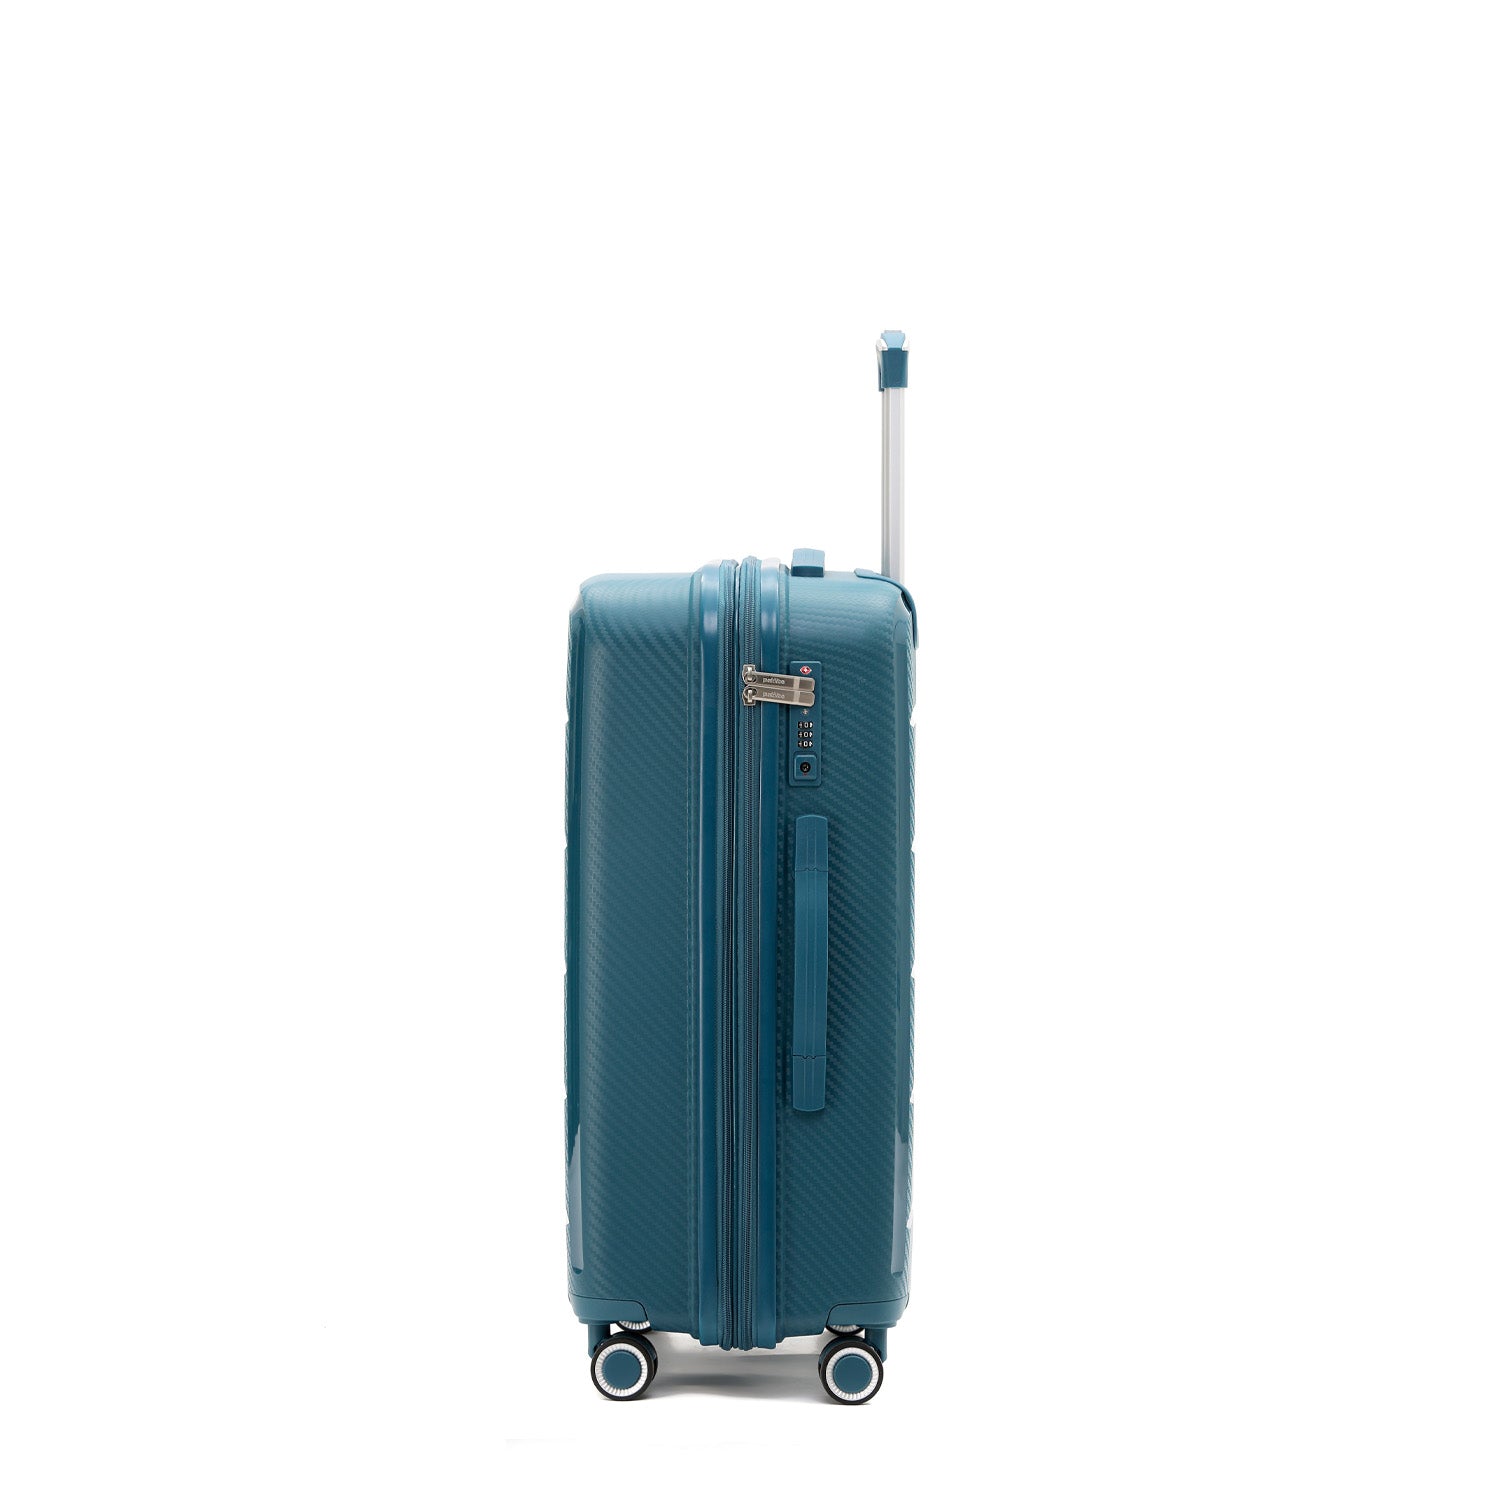 Paklite - PA7350 Medium 65cm spinner suitcase - Blue-3